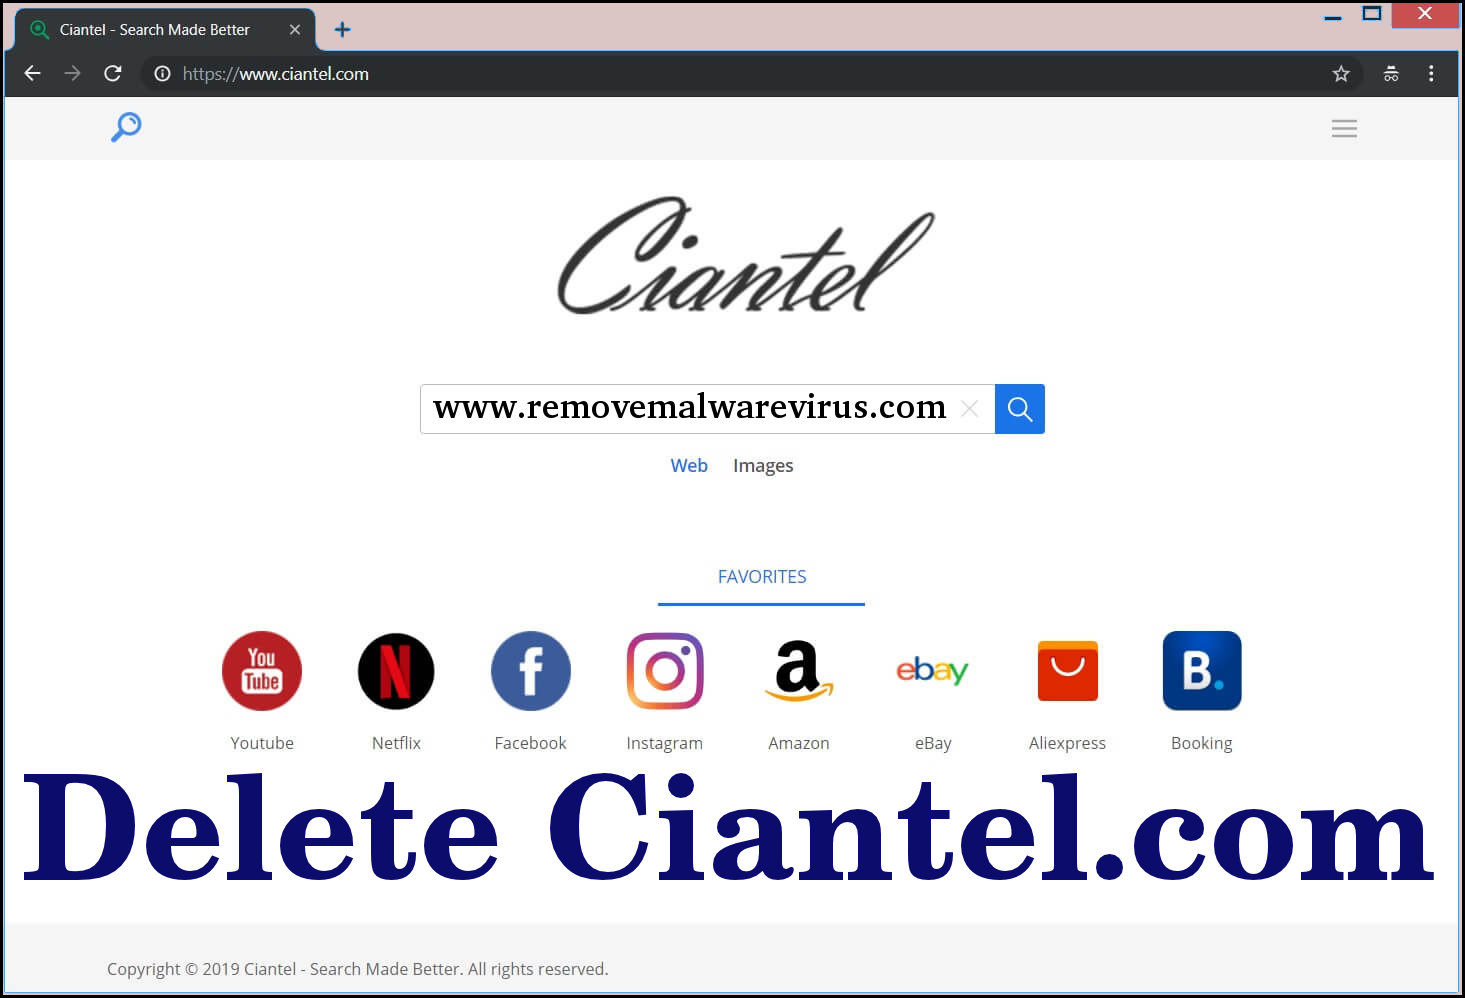 Delete Ciantel.com